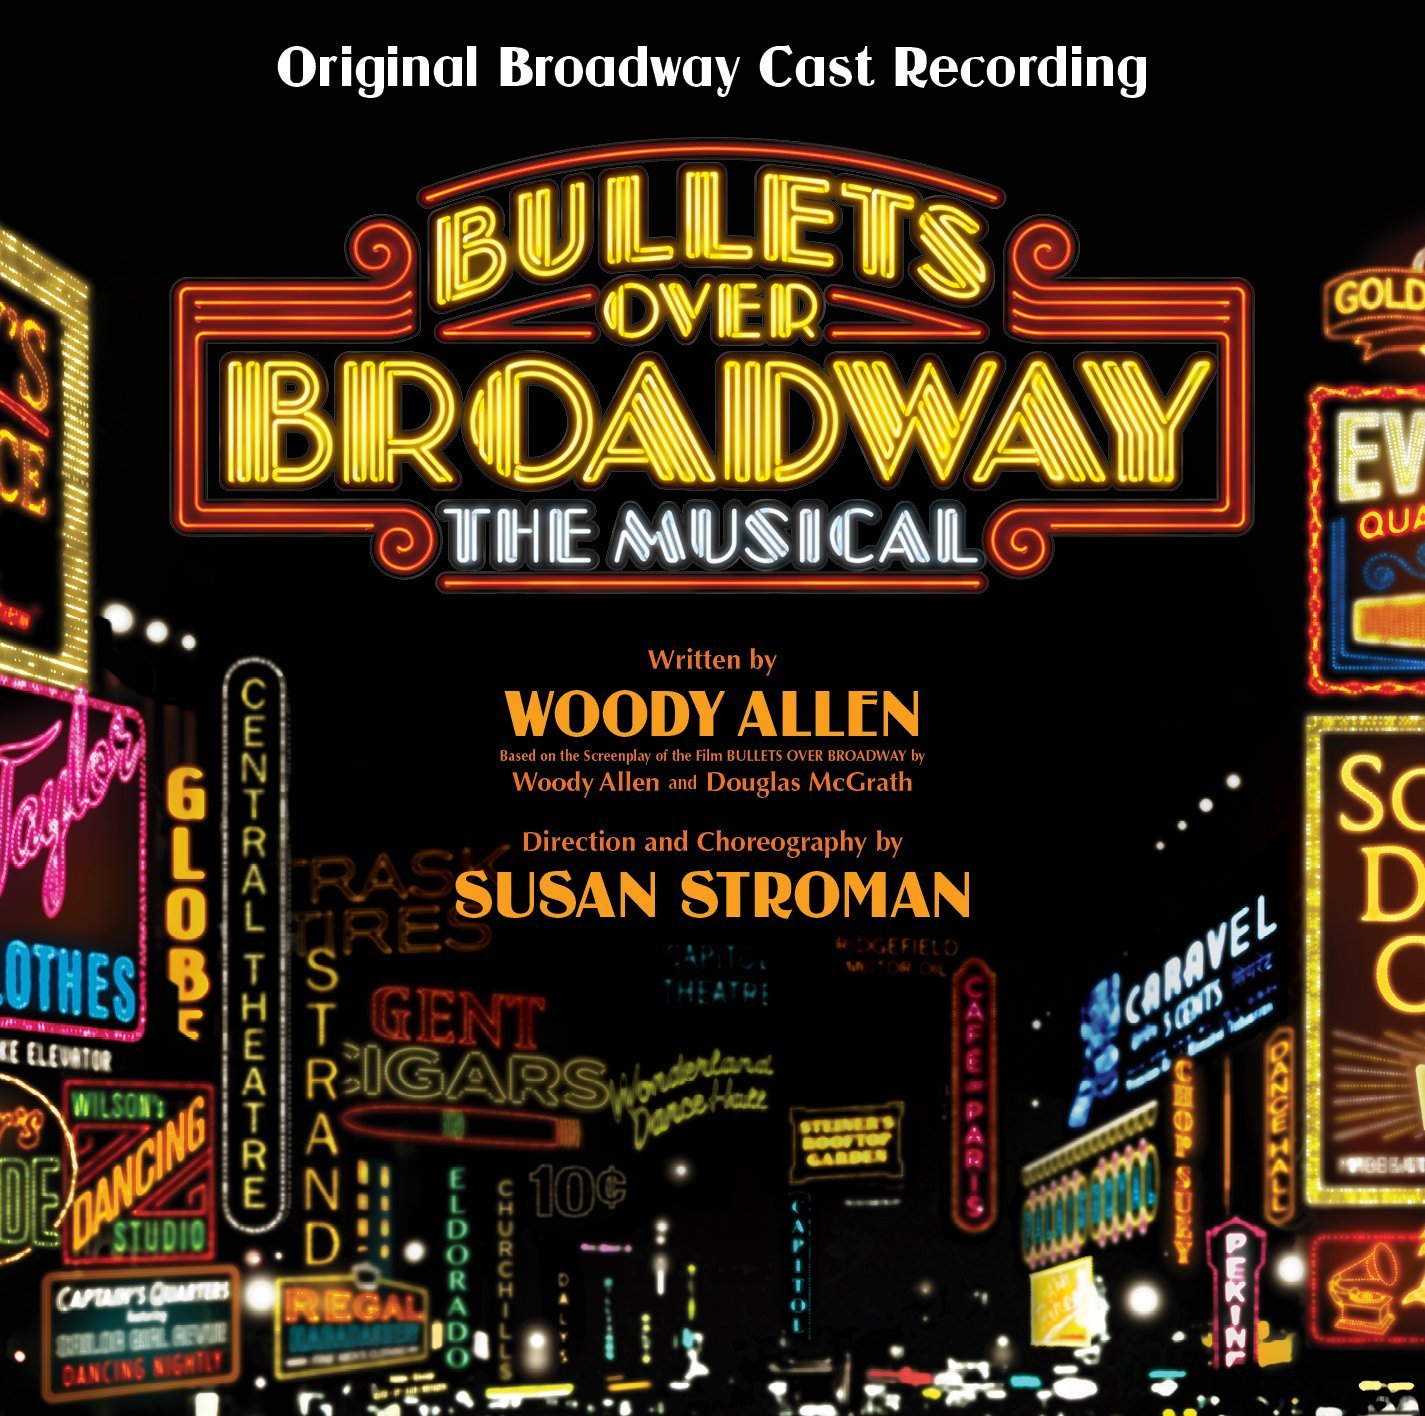 Bullets Over Broadway - Original Broadway Cast Recording Album